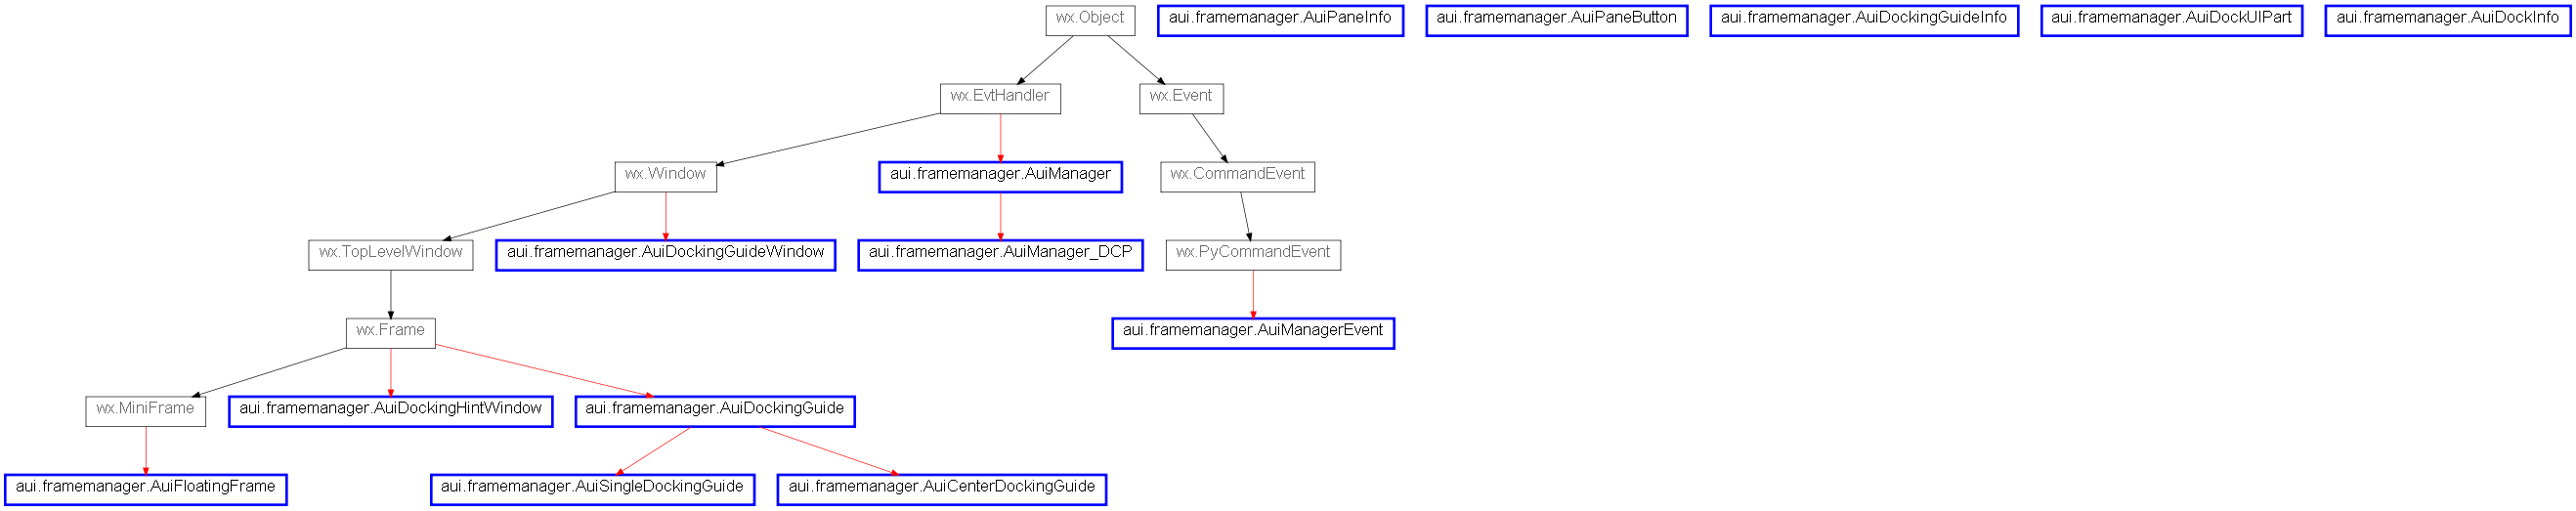 Inheritance diagram of aui.framemanager.AuiCenterDockingGuide, aui.framemanager.AuiDockInfo, aui.framemanager.AuiDockUIPart, aui.framemanager.AuiDockingGuide, aui.framemanager.AuiDockingGuideInfo, aui.framemanager.AuiDockingGuideWindow, aui.framemanager.AuiDockingHintWindow, aui.framemanager.AuiFloatingFrame, aui.framemanager.AuiManager, aui.framemanager.AuiManagerEvent, aui.framemanager.AuiManager_DCP, aui.framemanager.AuiPaneButton, aui.framemanager.AuiPaneInfo, aui.framemanager.AuiSingleDockingGuide